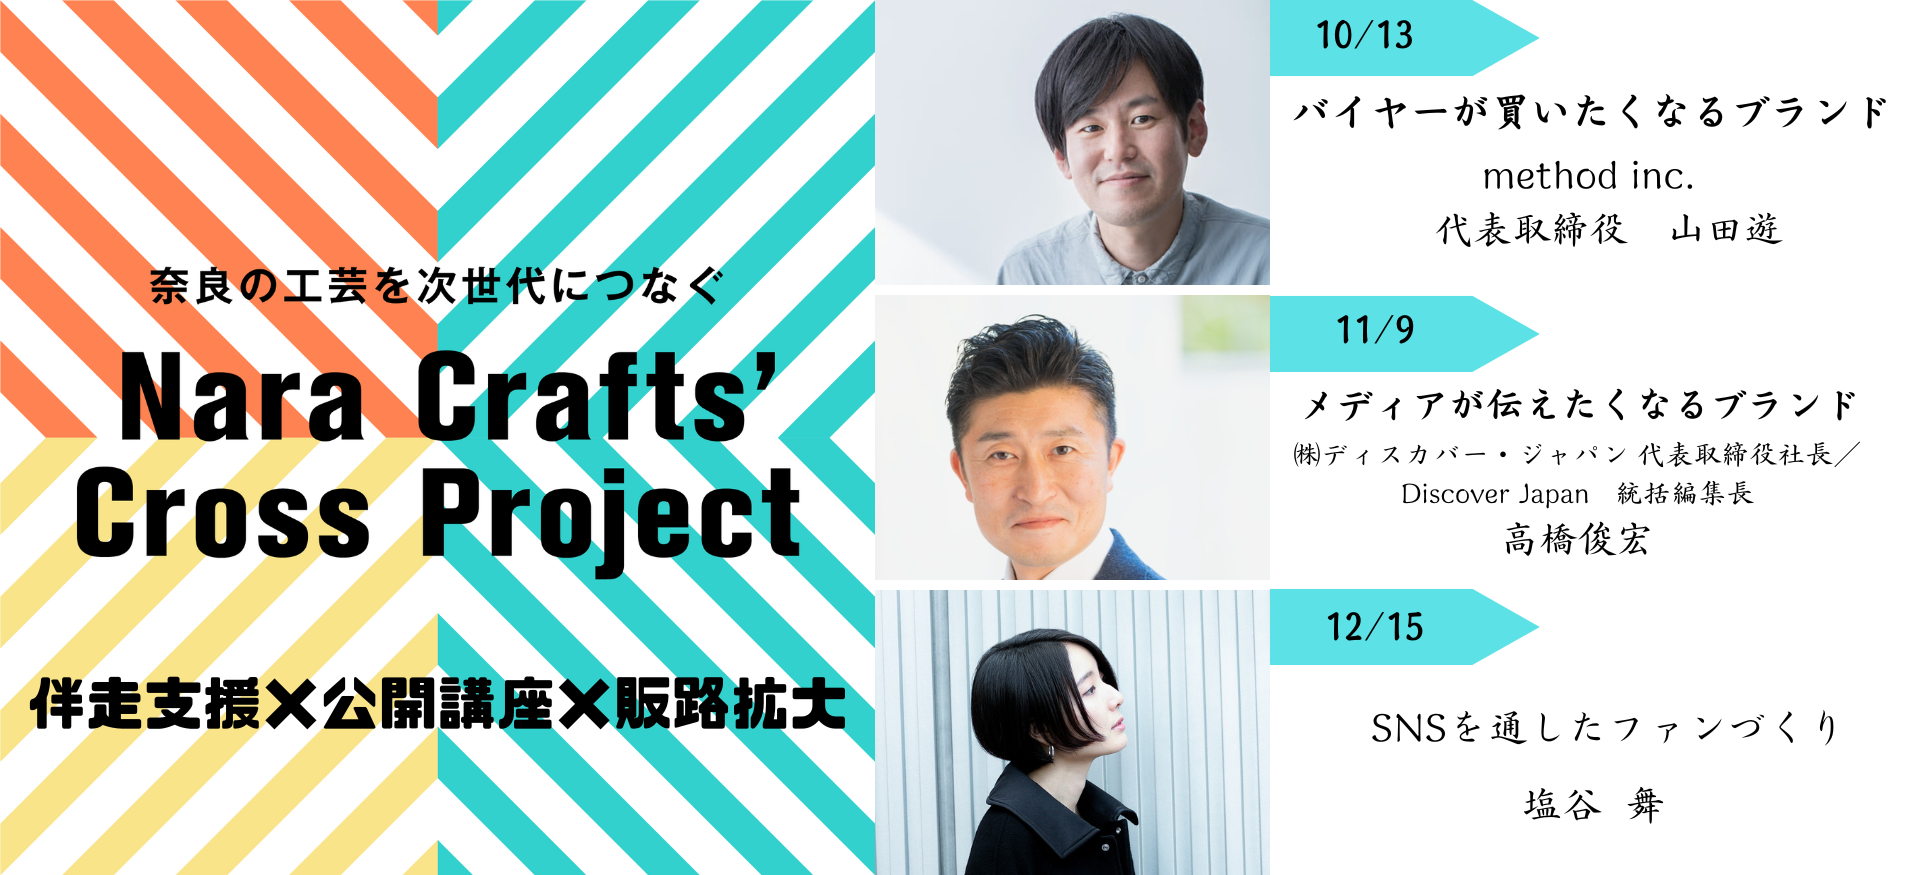 Nara Crafts' Cross Project